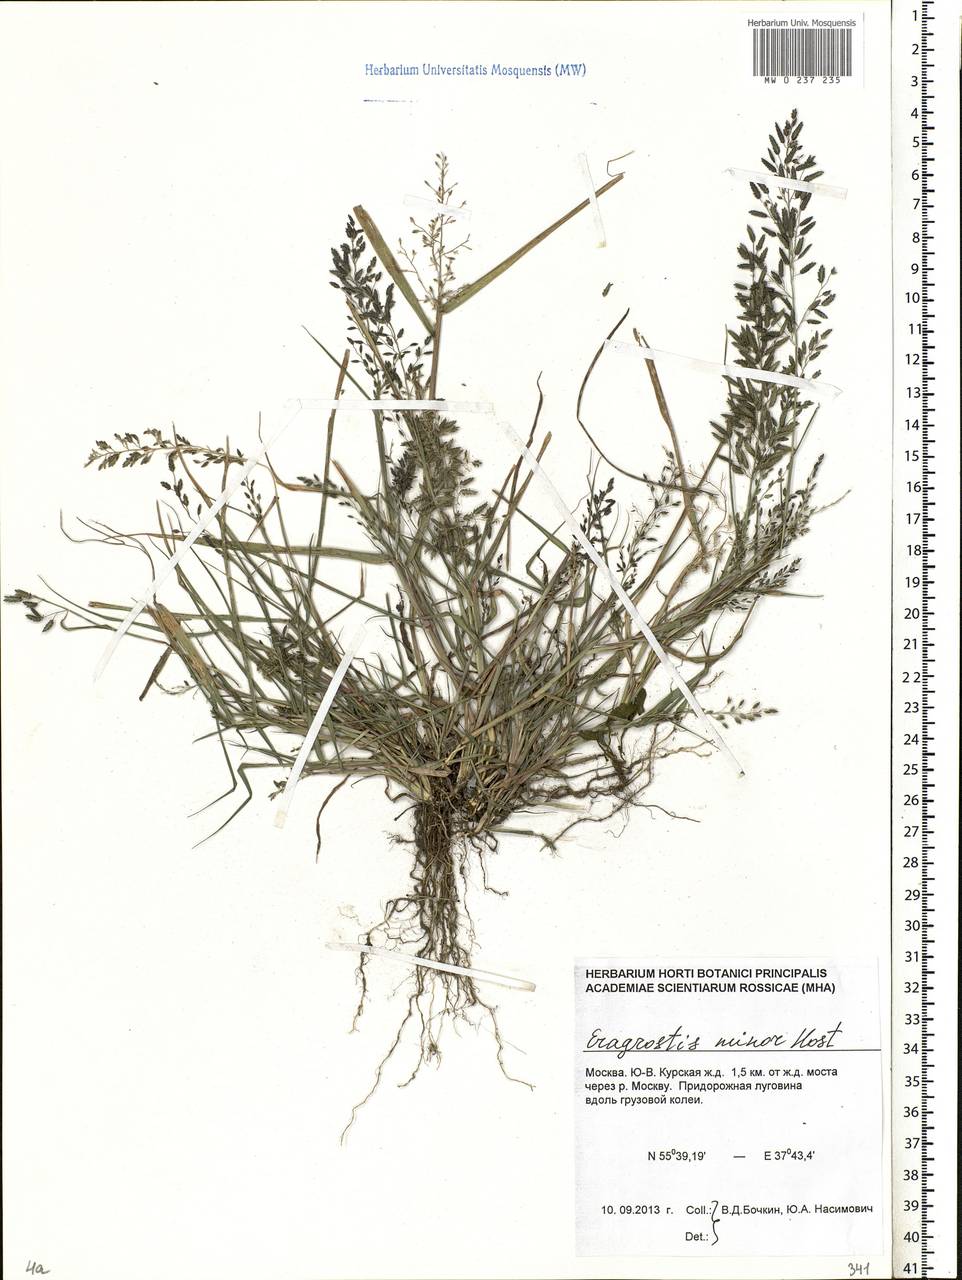 Eragrostis minor Host, Eastern Europe, Moscow region (E4a) (Russia)